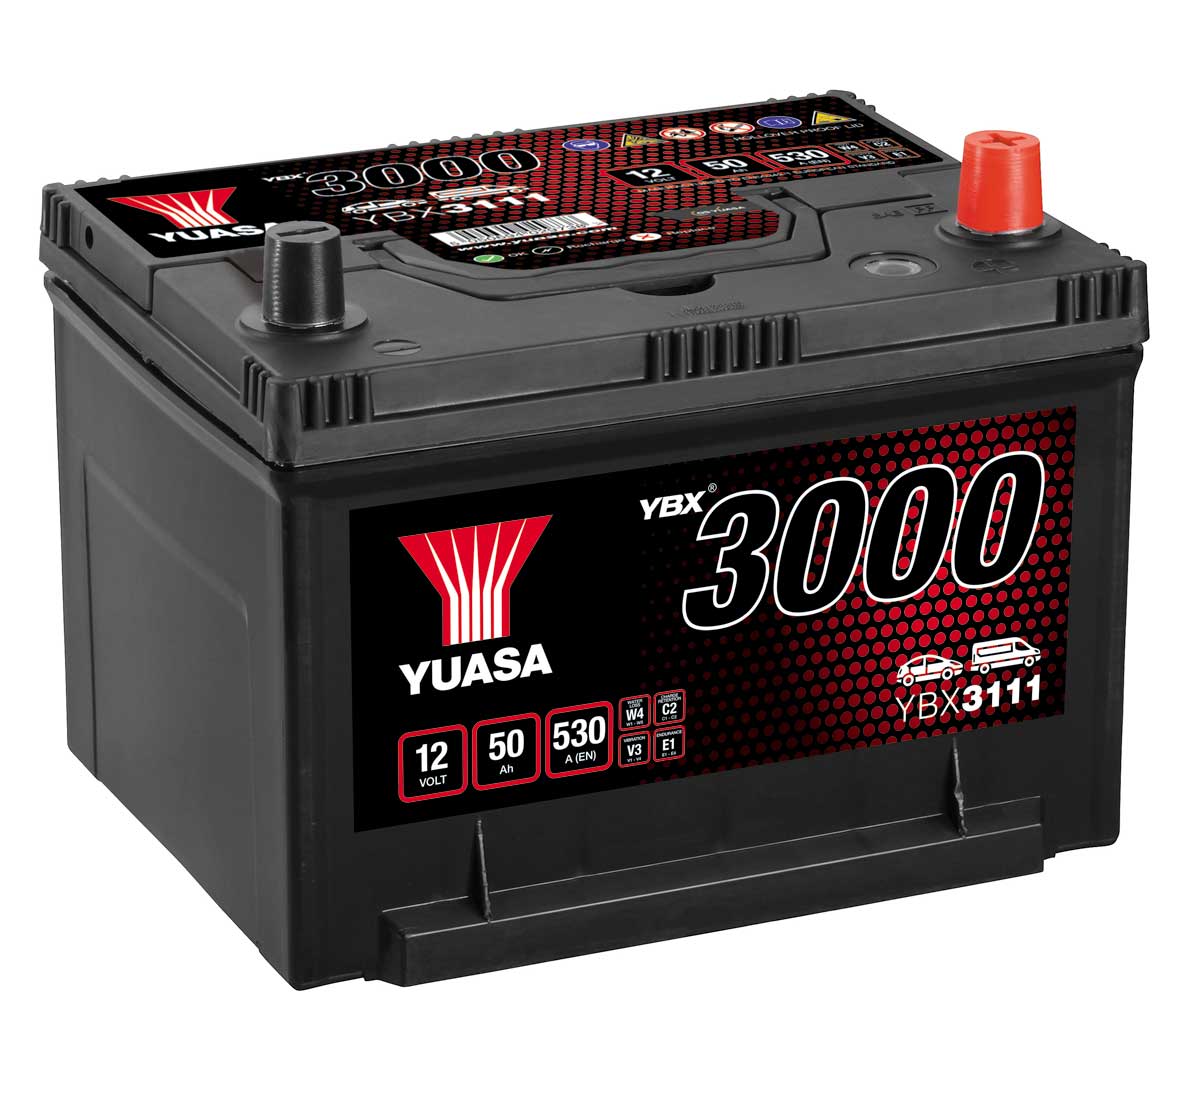 Yuasa YBX3111 011 Size 12V 50Ah Car Battery